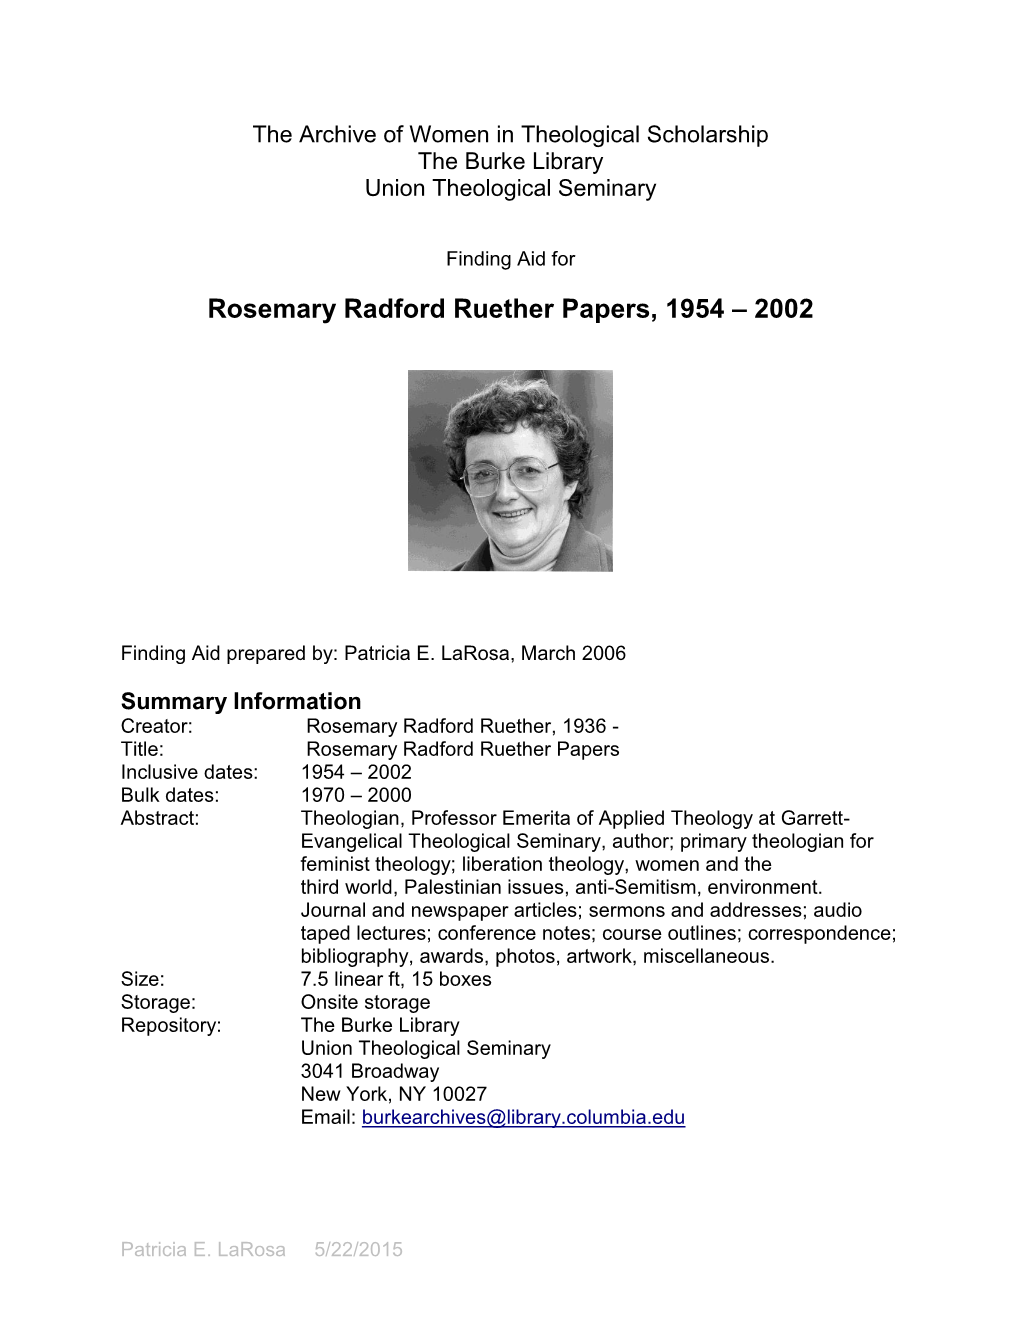 Rosemary Radford Ruether Papers, 1954 – 2002